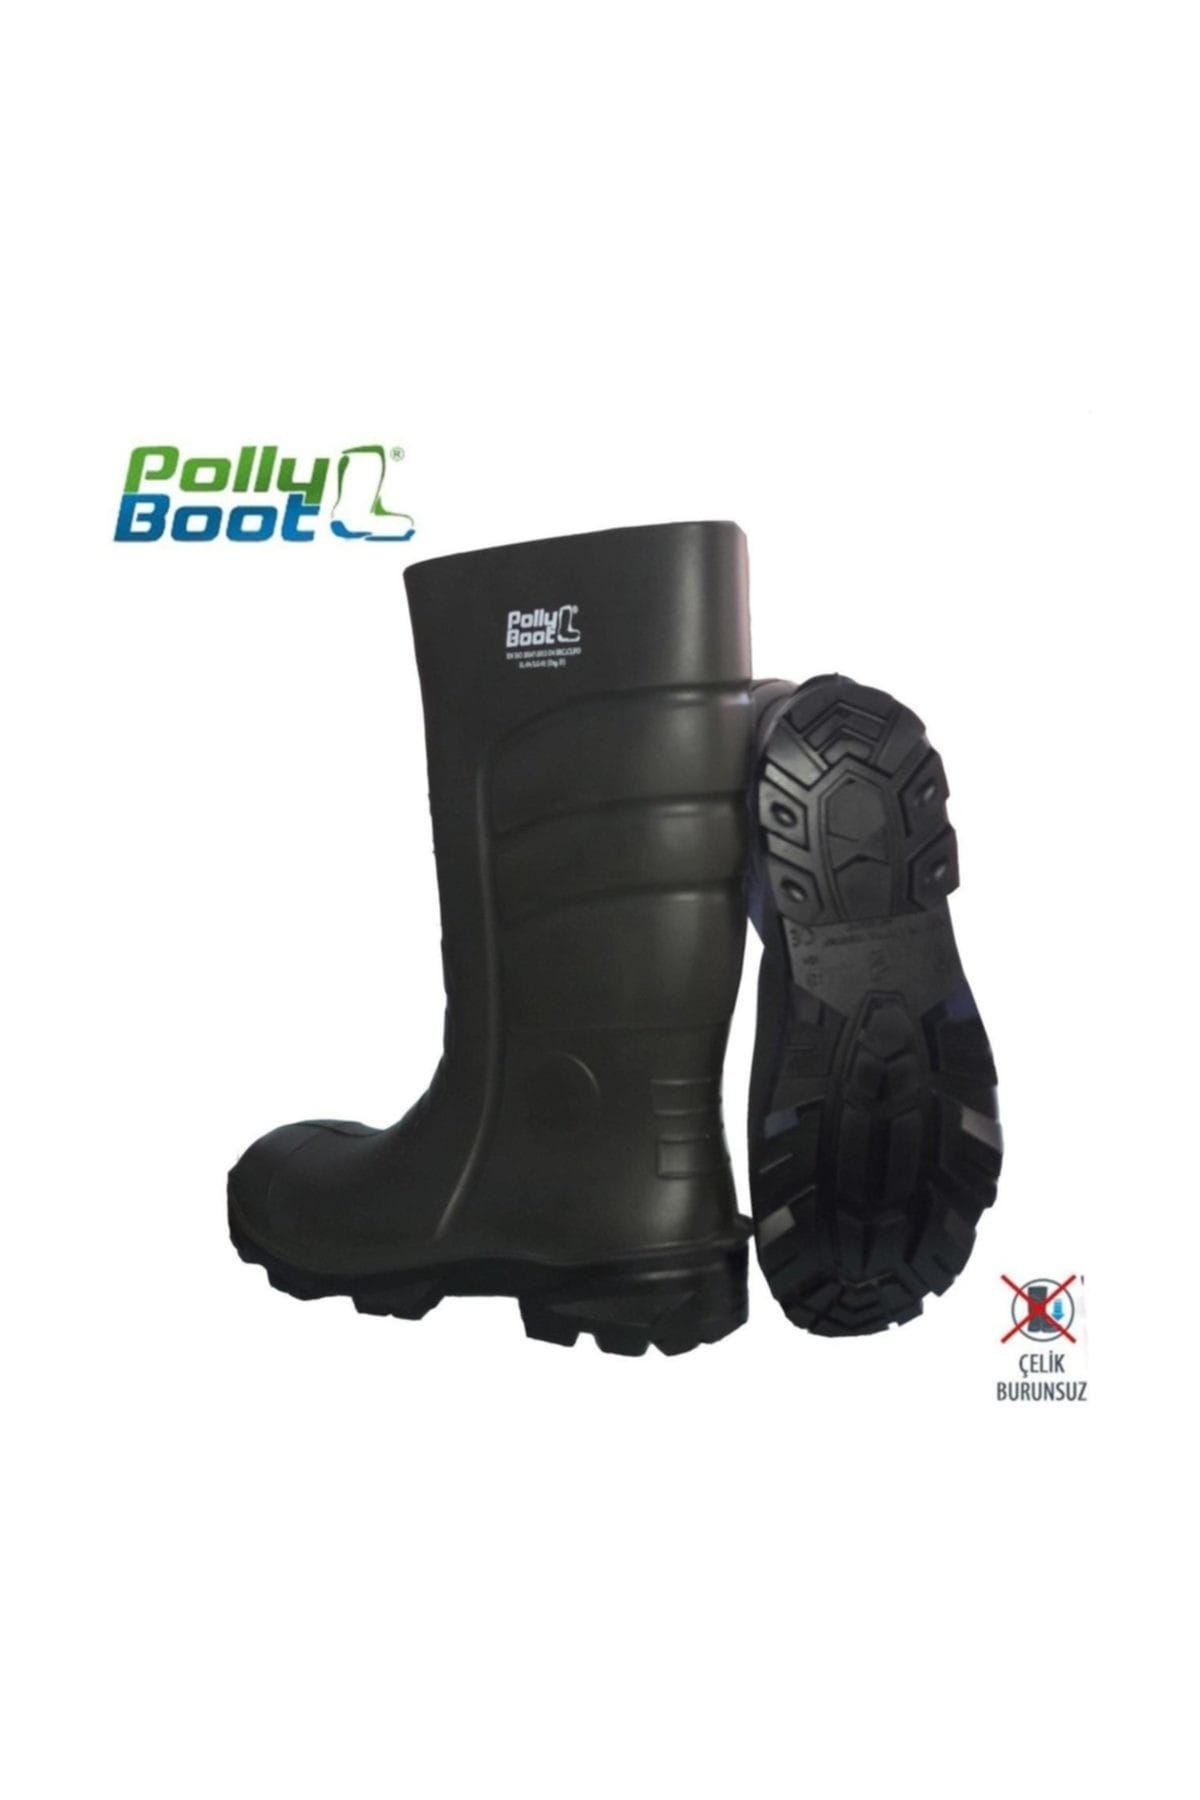 Polly Boot Beta 47 Numara Poliüratan Çizme